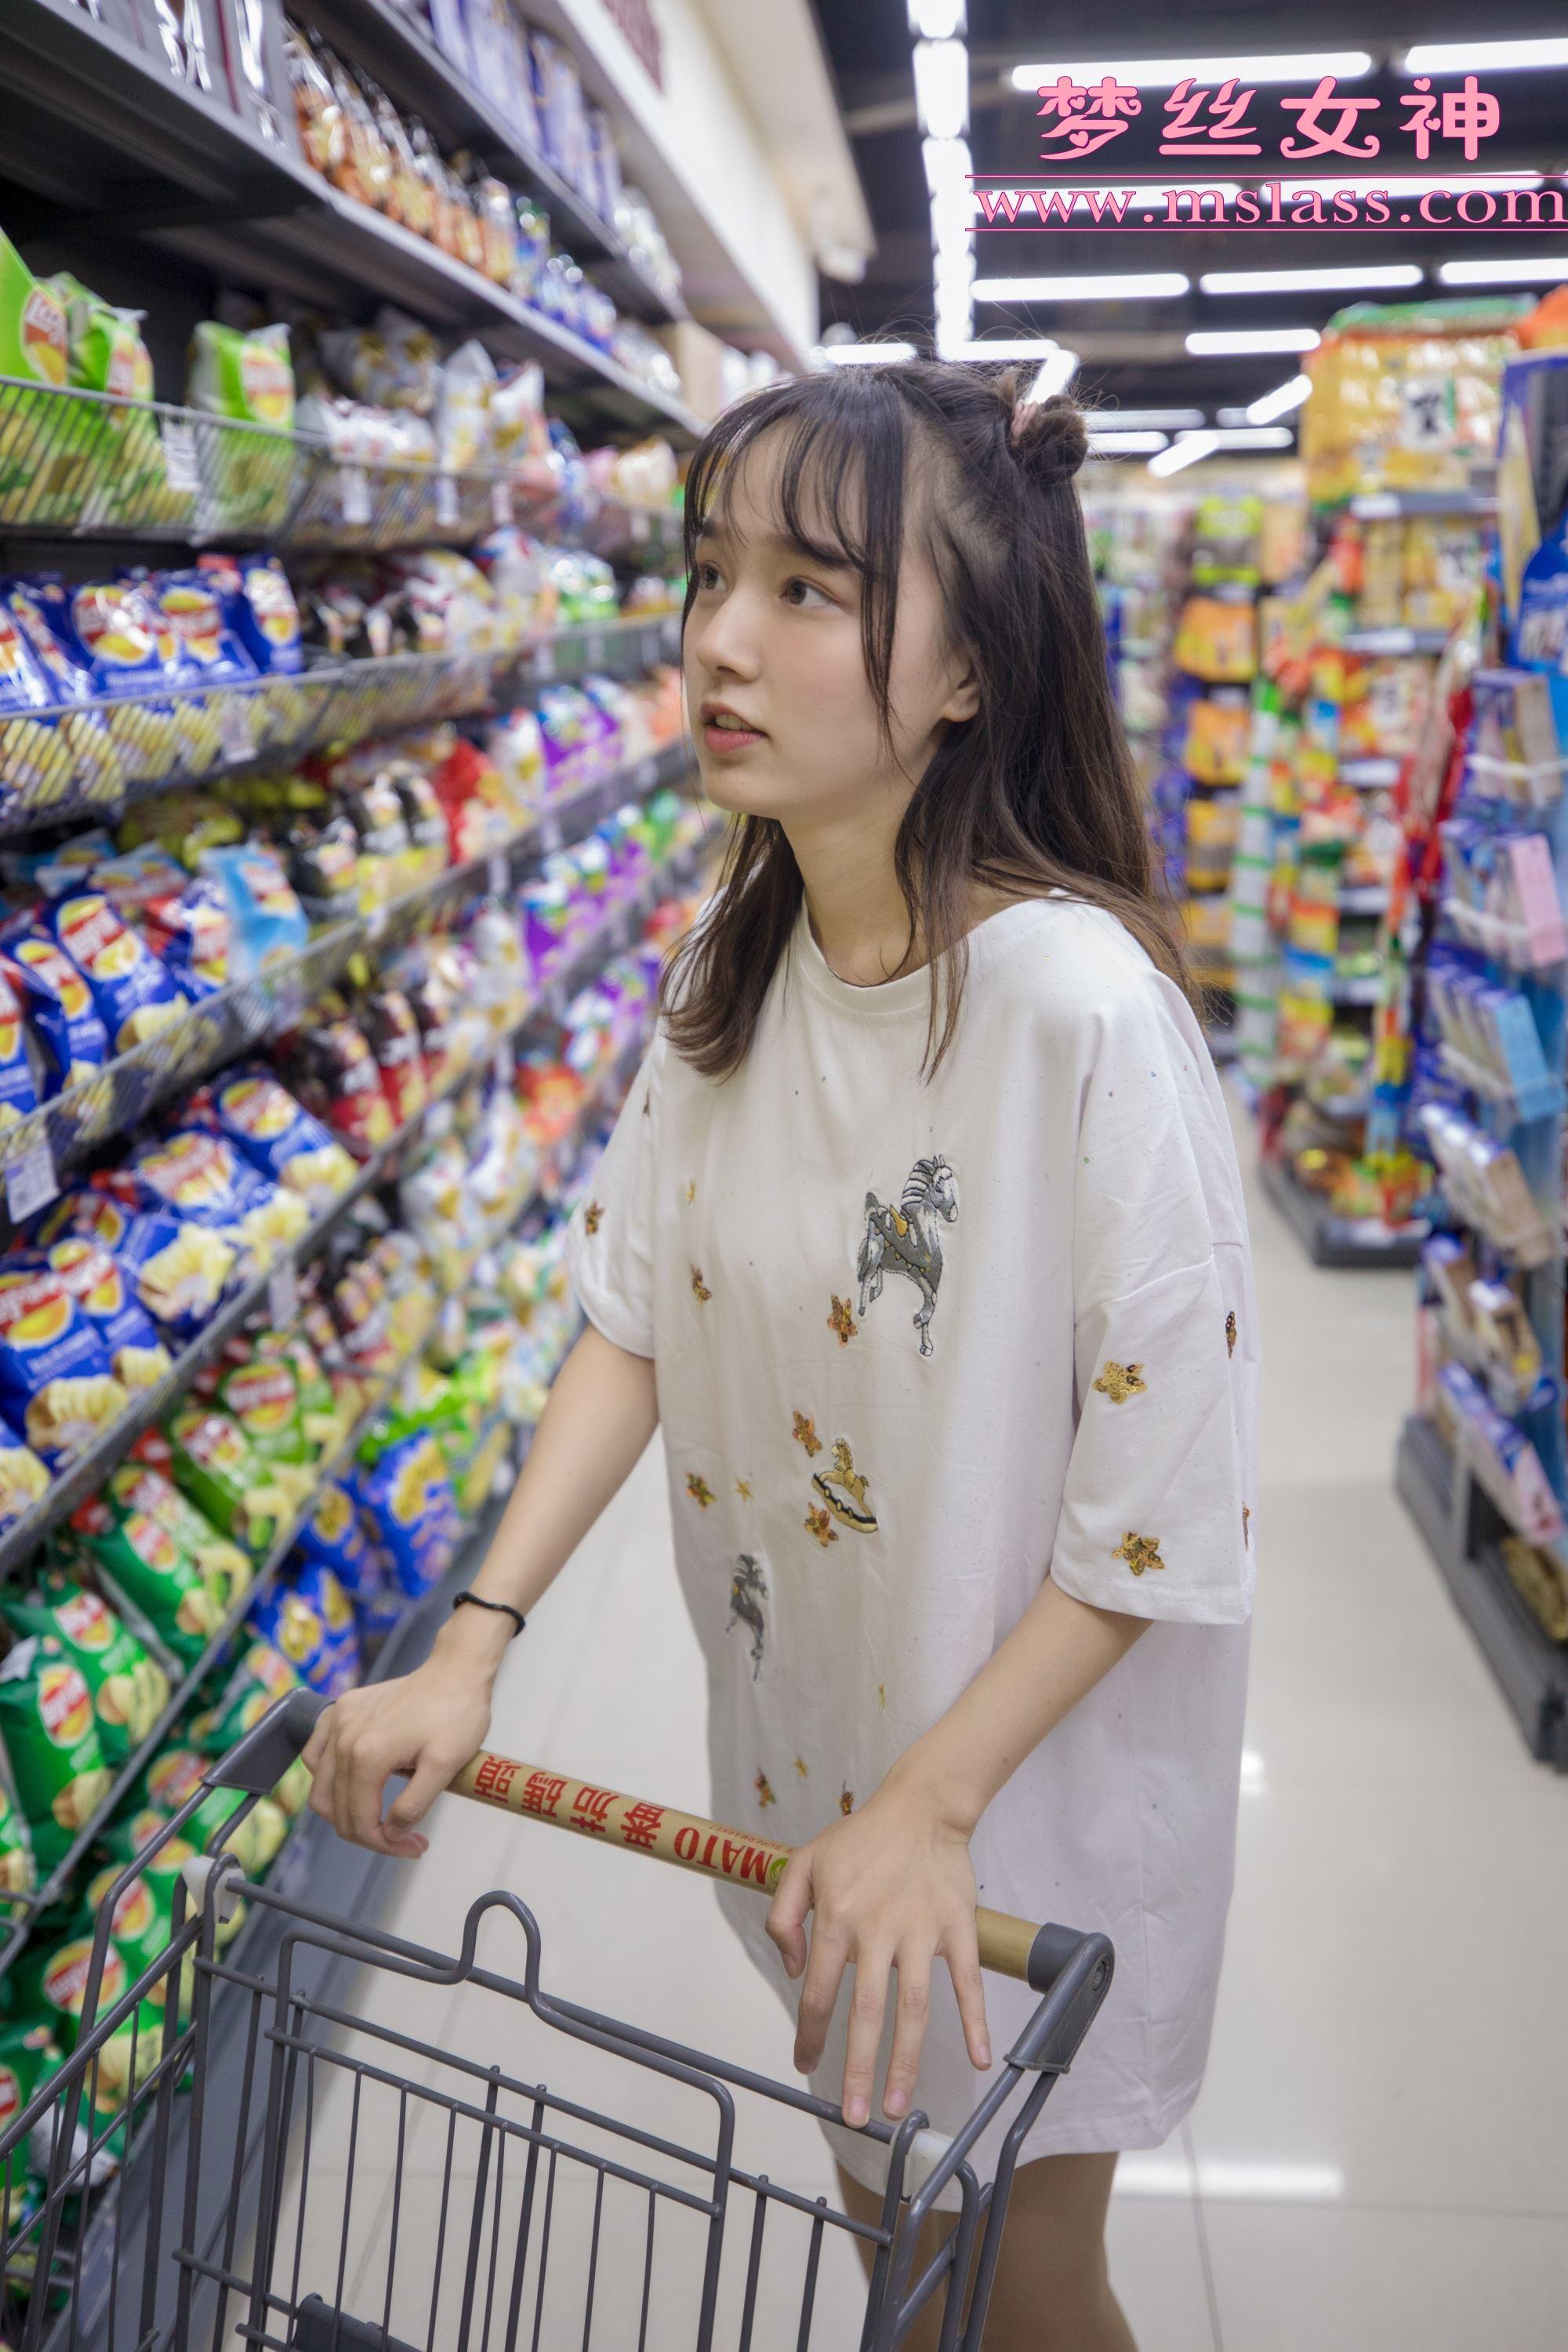 MSLASS梦丝女神 2019.05.02 超市的吃货少女 玥玥 - 60.jpg